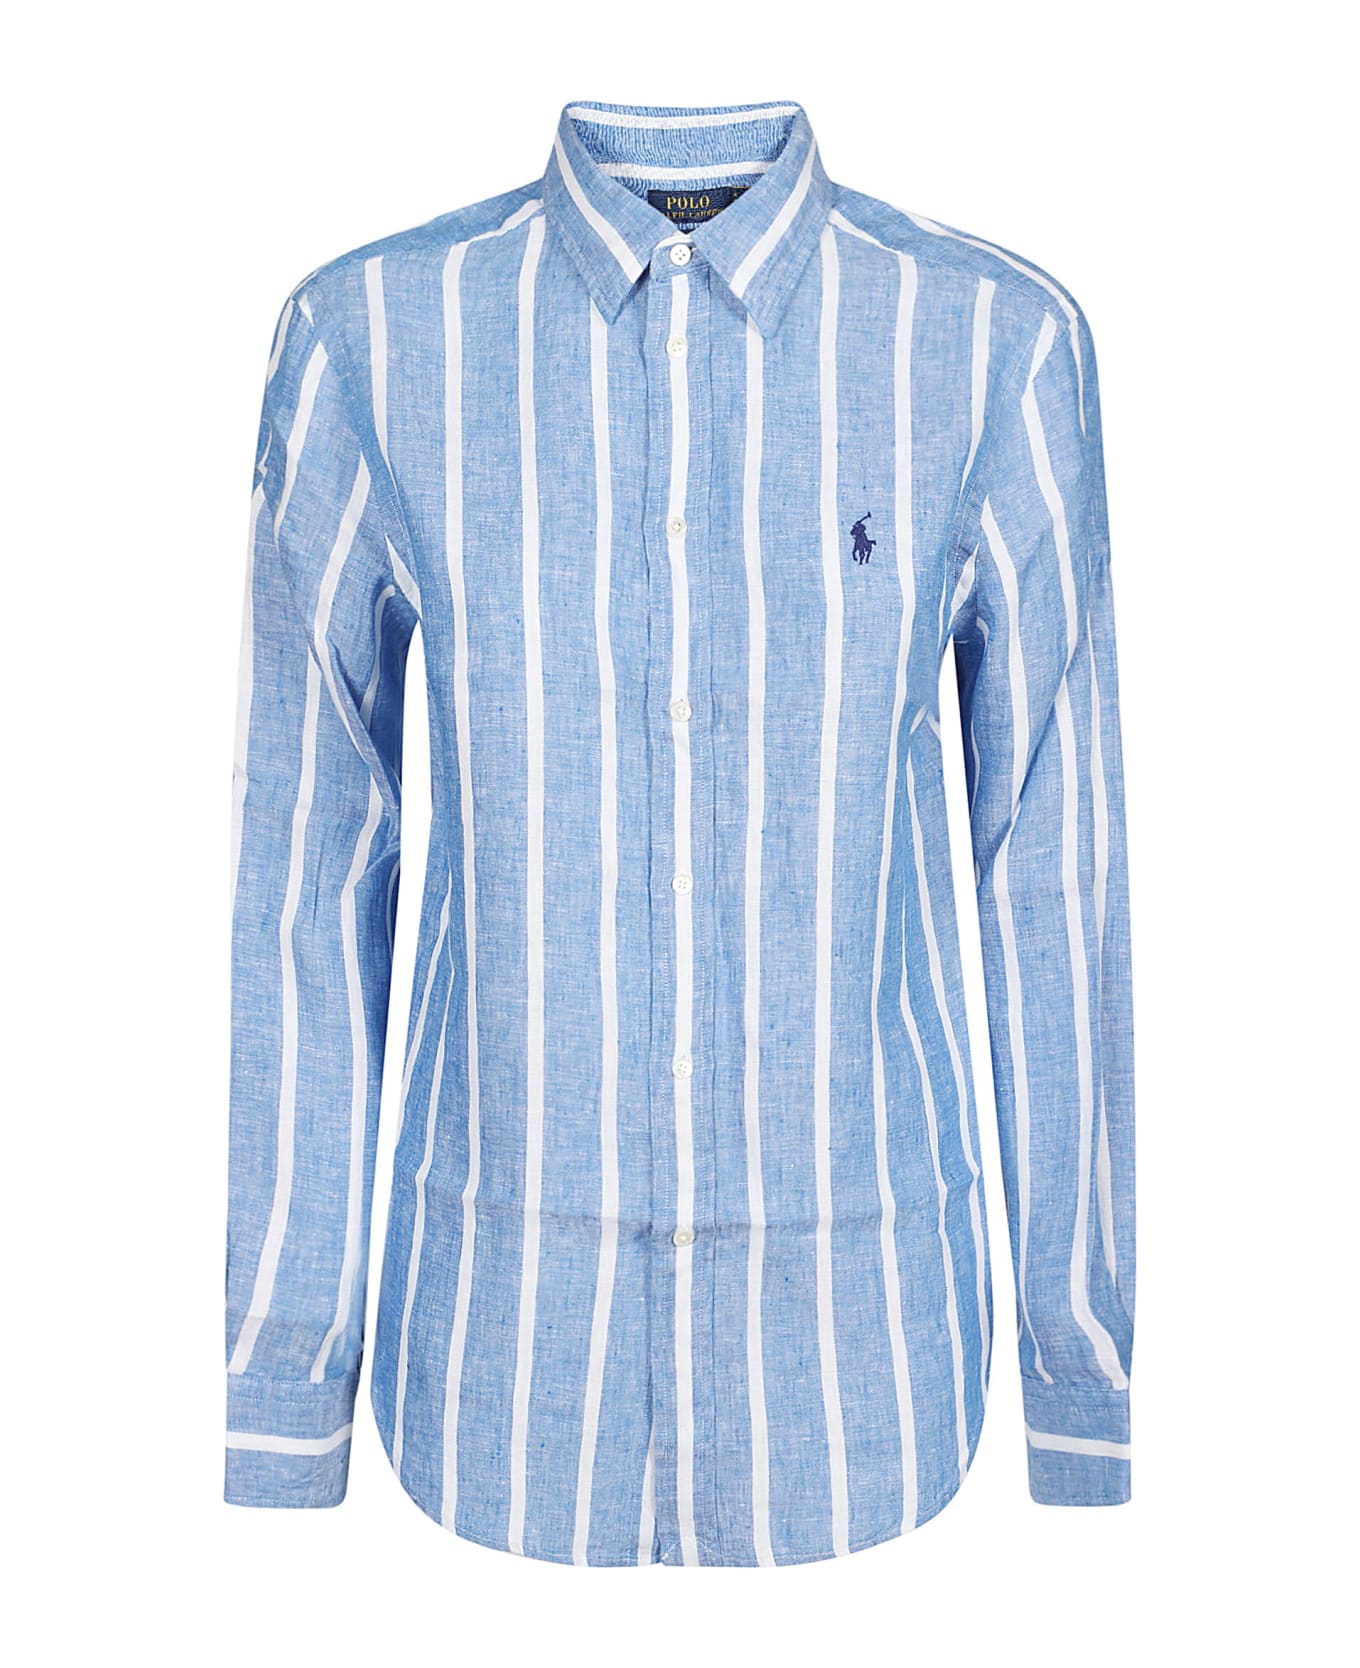 Polo Ralph Lauren Long Sleeve Button Front Shirt - Blue/white